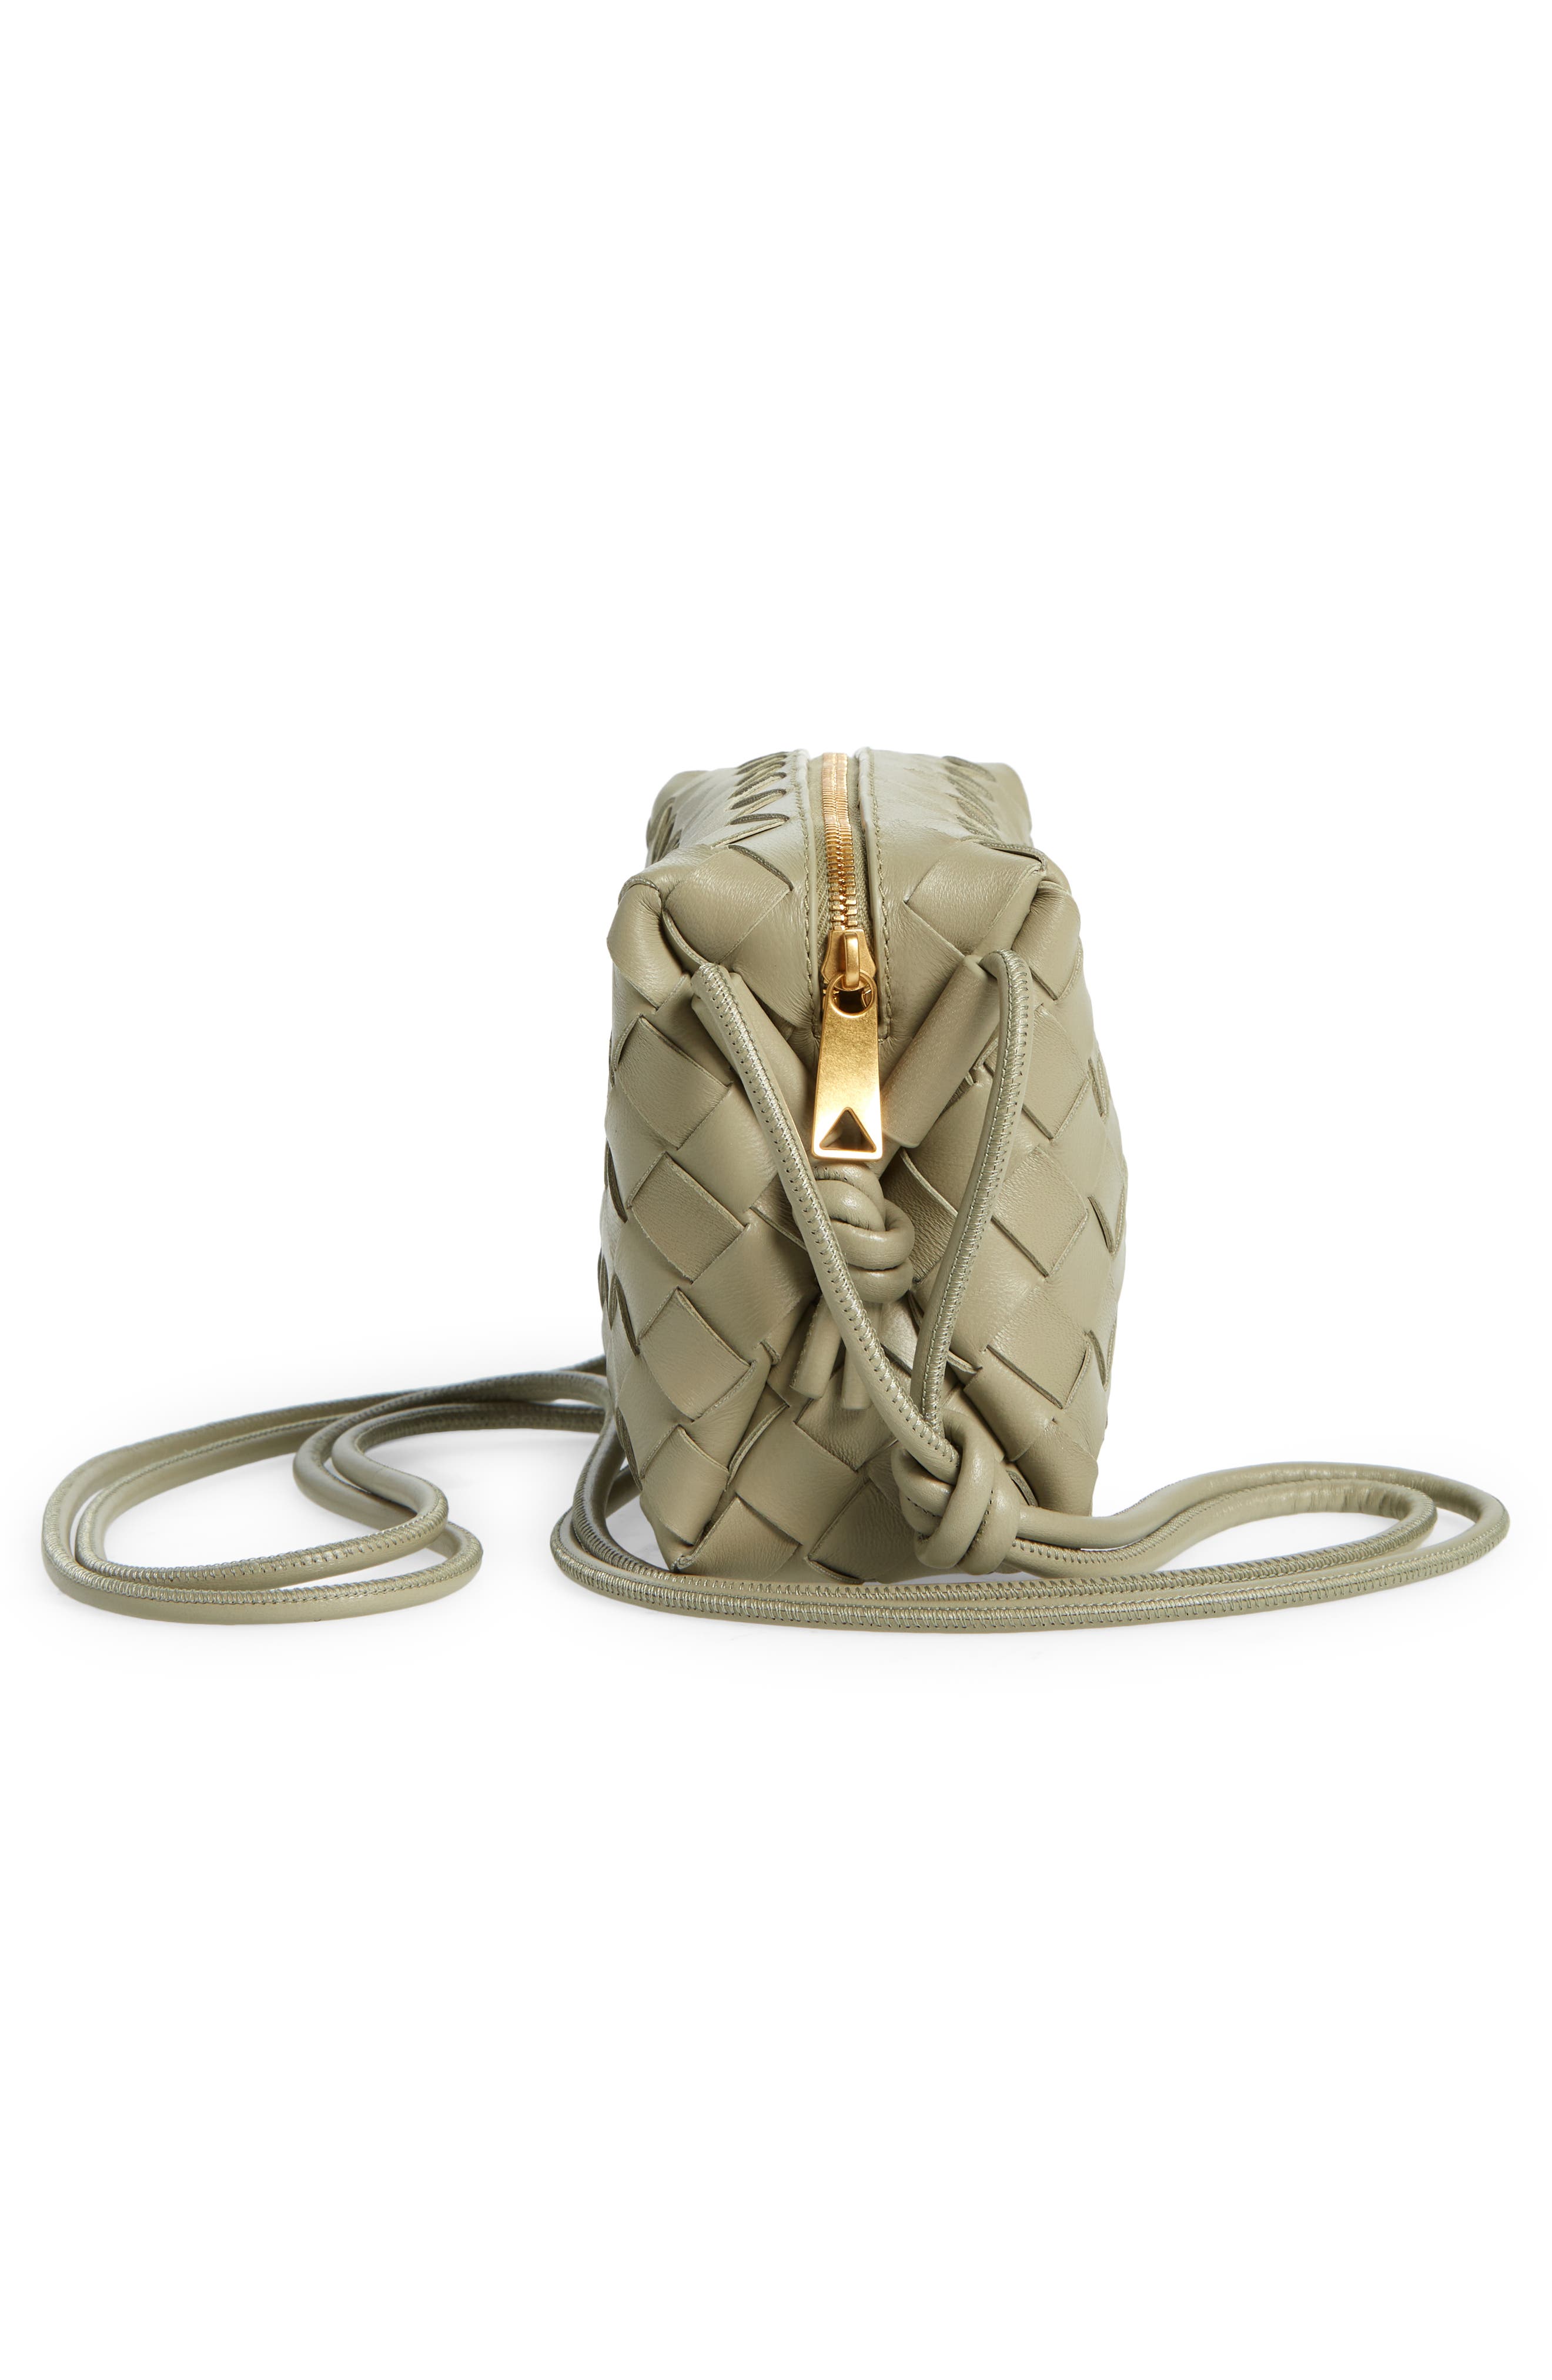 Bottega Veneta Mini Loop Bag in Travertine & Gold